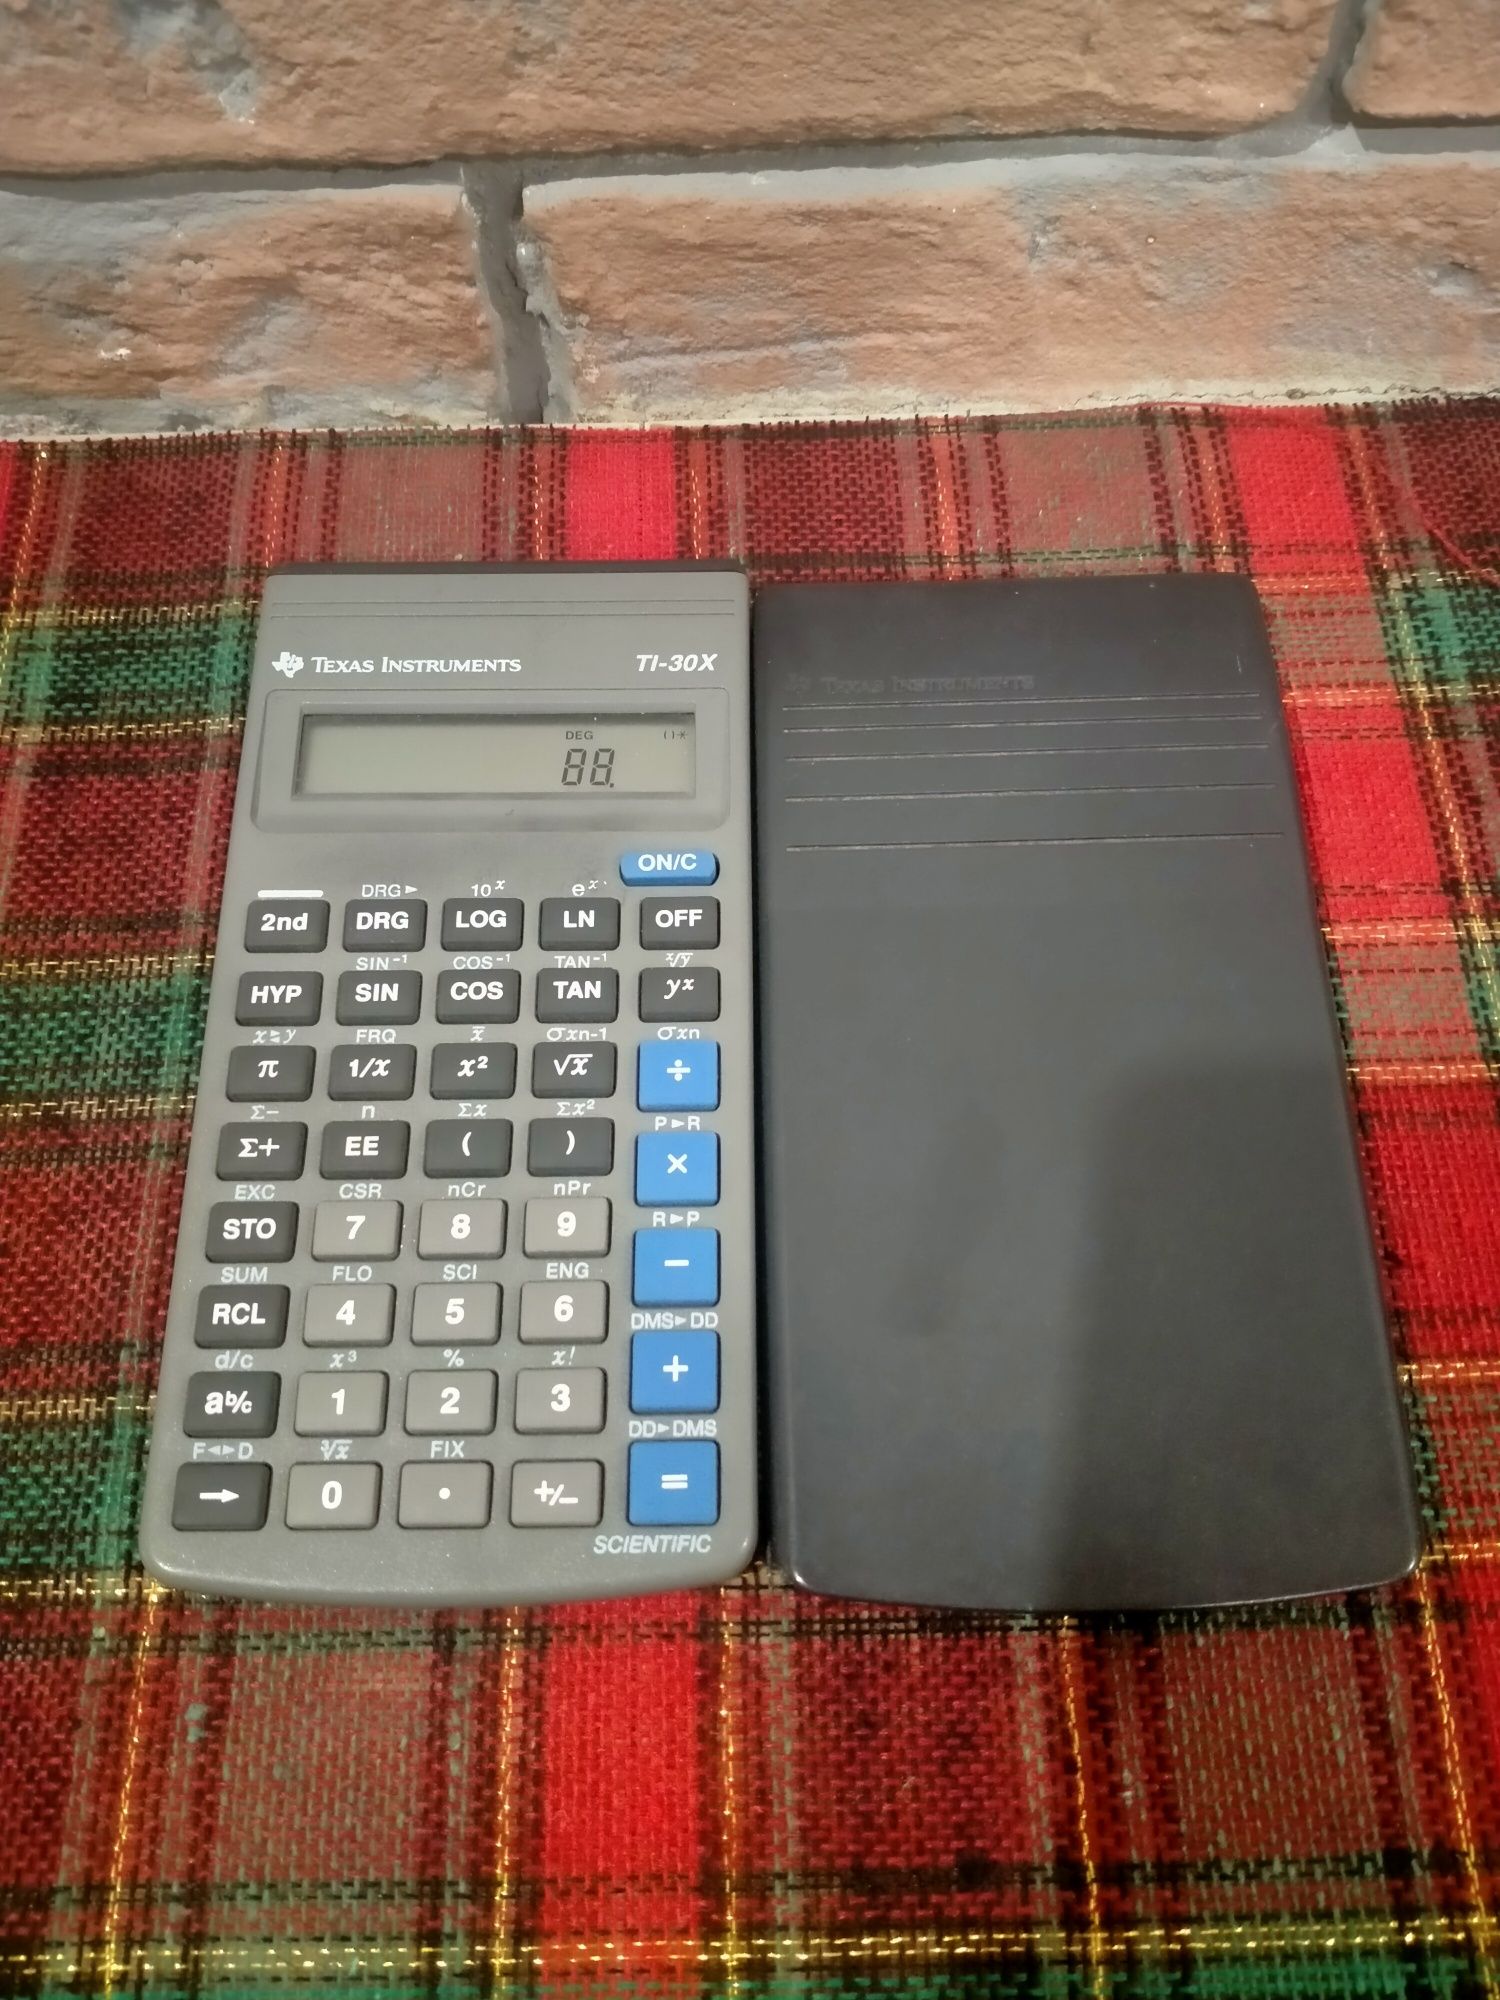 Texas Instruments TI-30X